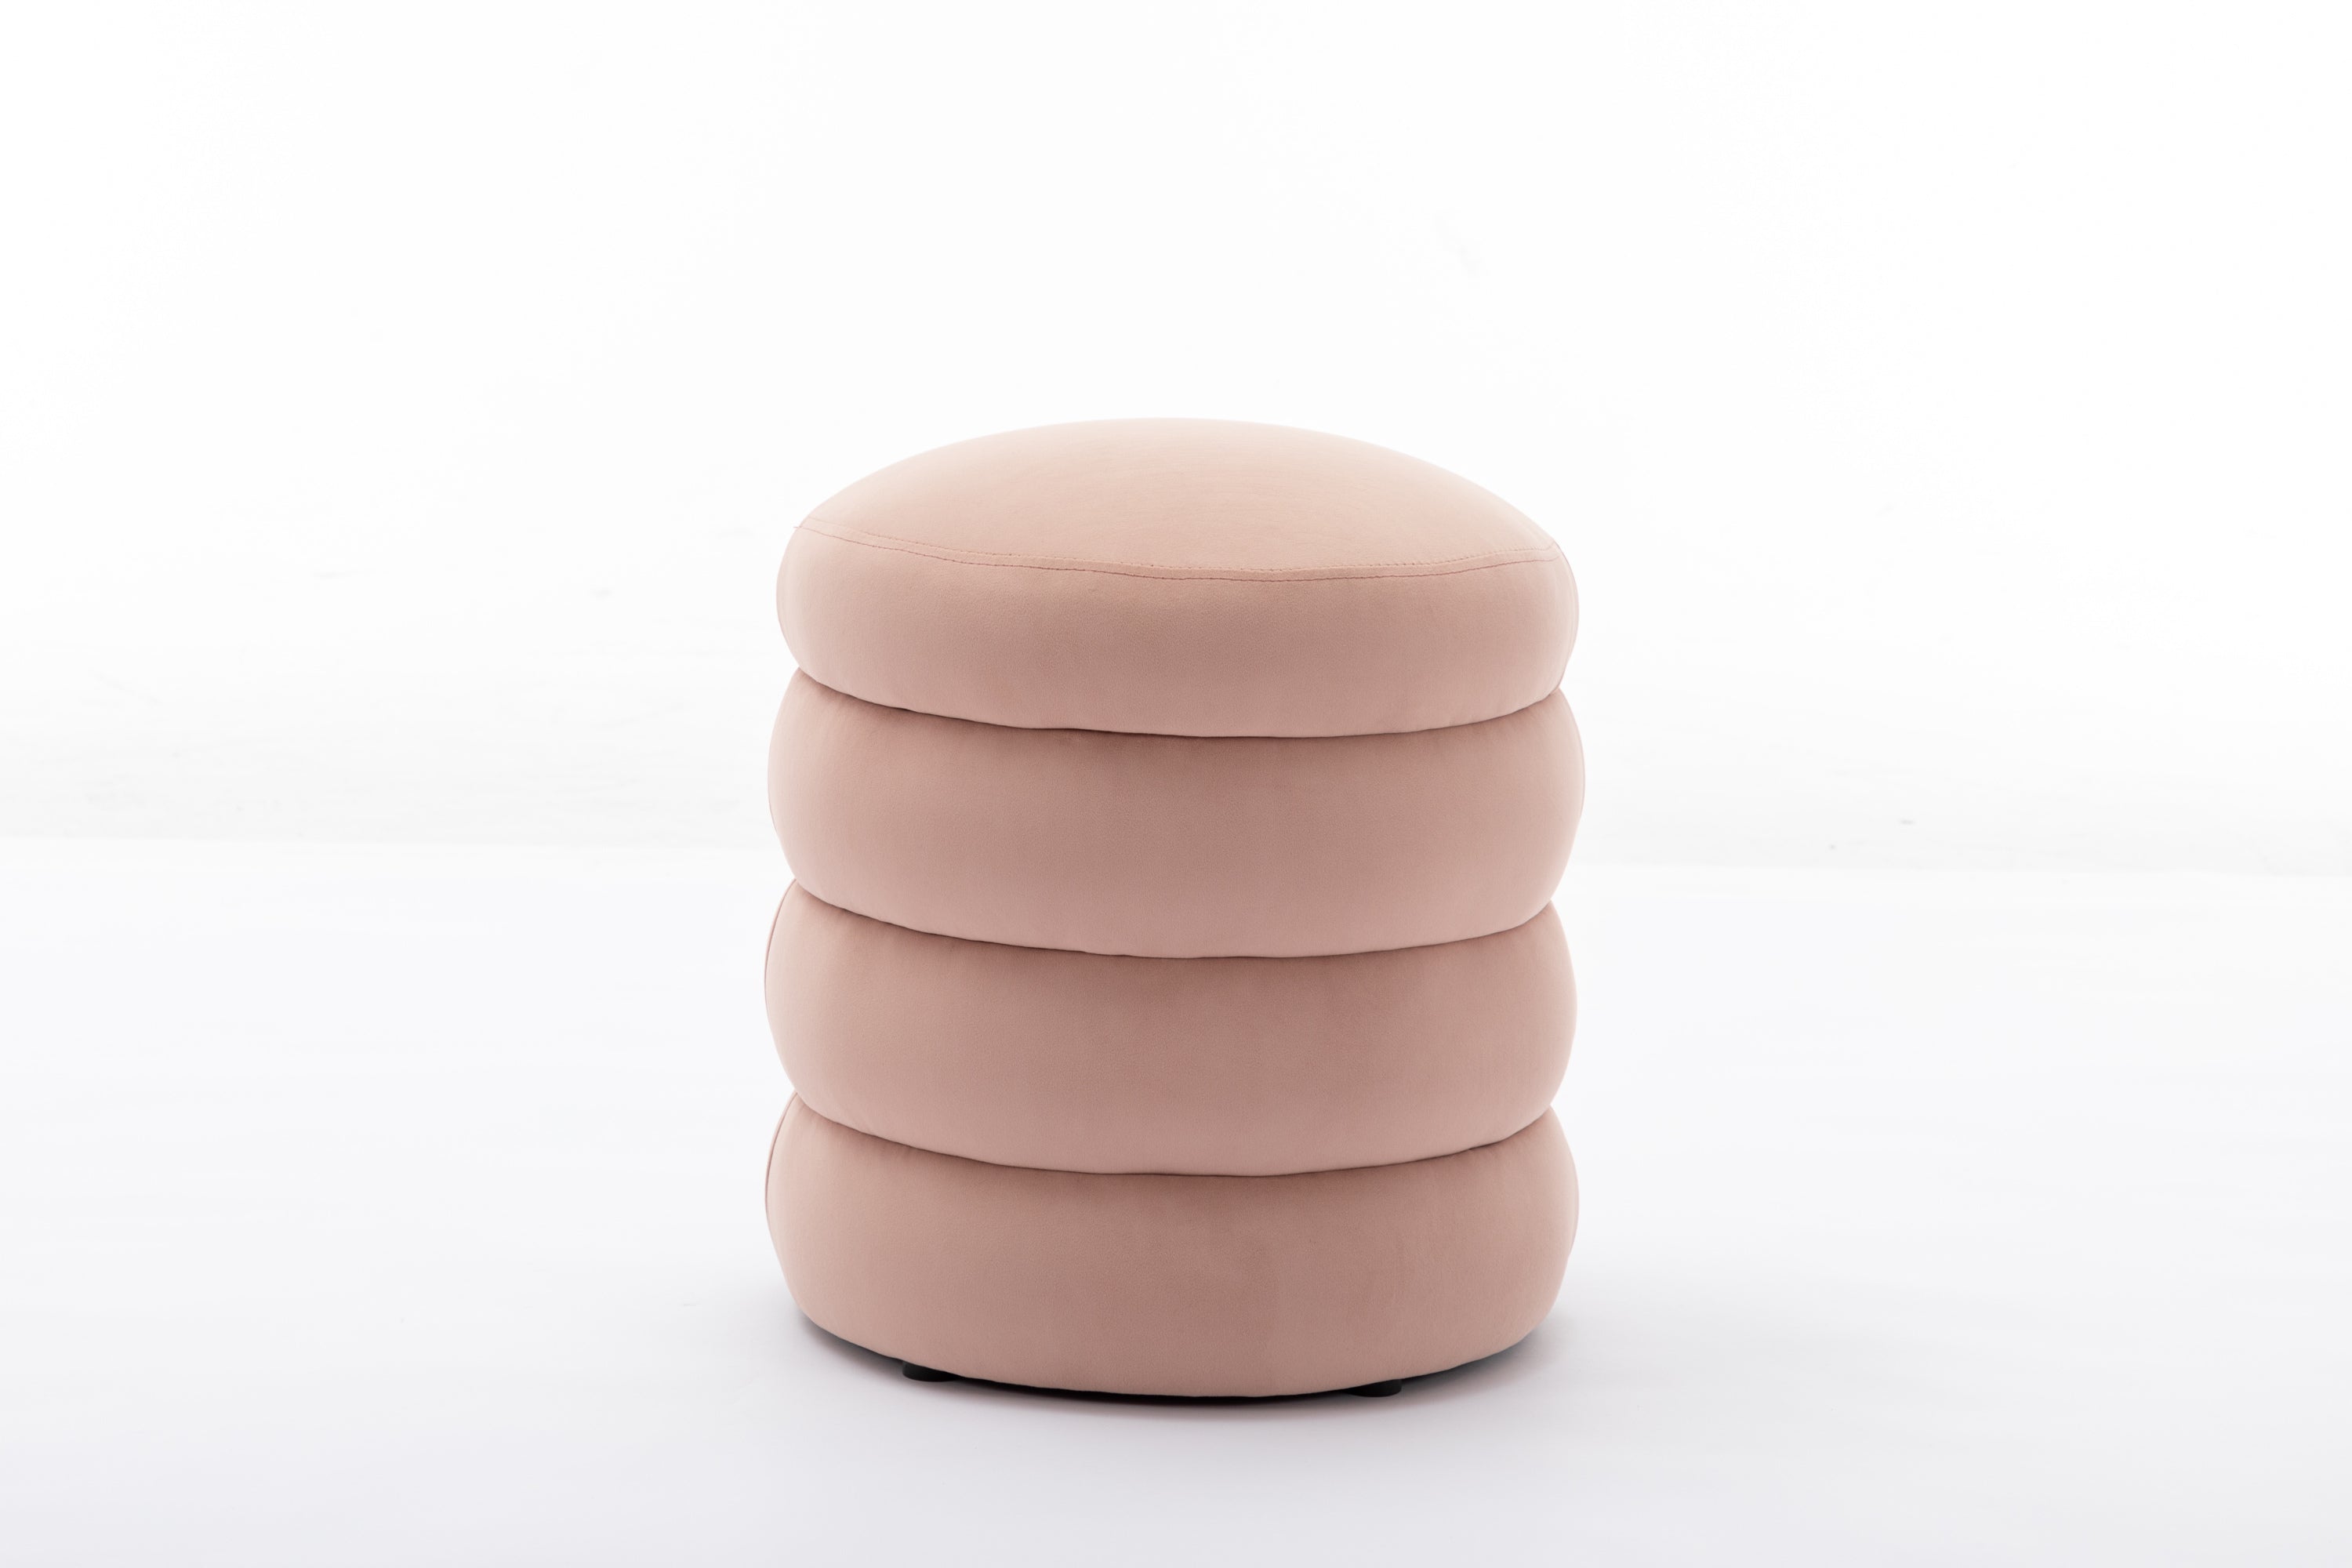 006-Soft Velvet  Round Ottoman Footrest Stool,Pink